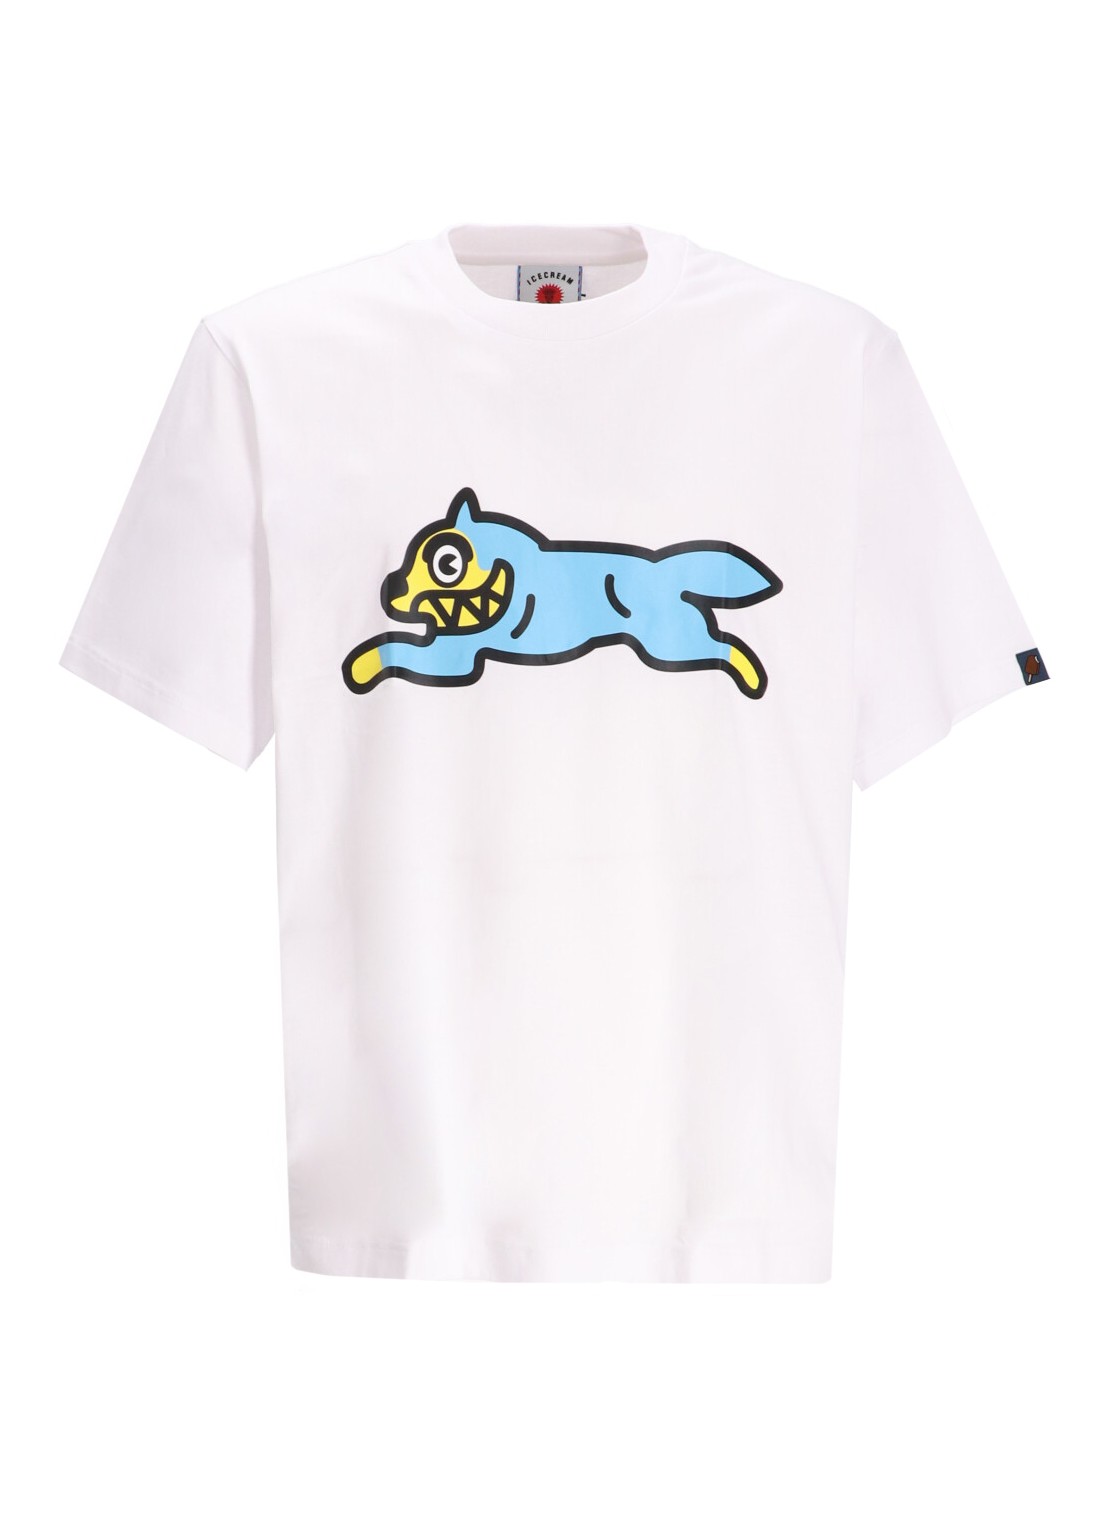 Camiseta icecream t-shirt manrunning dog t-shirt - ic24236 white talla S
 